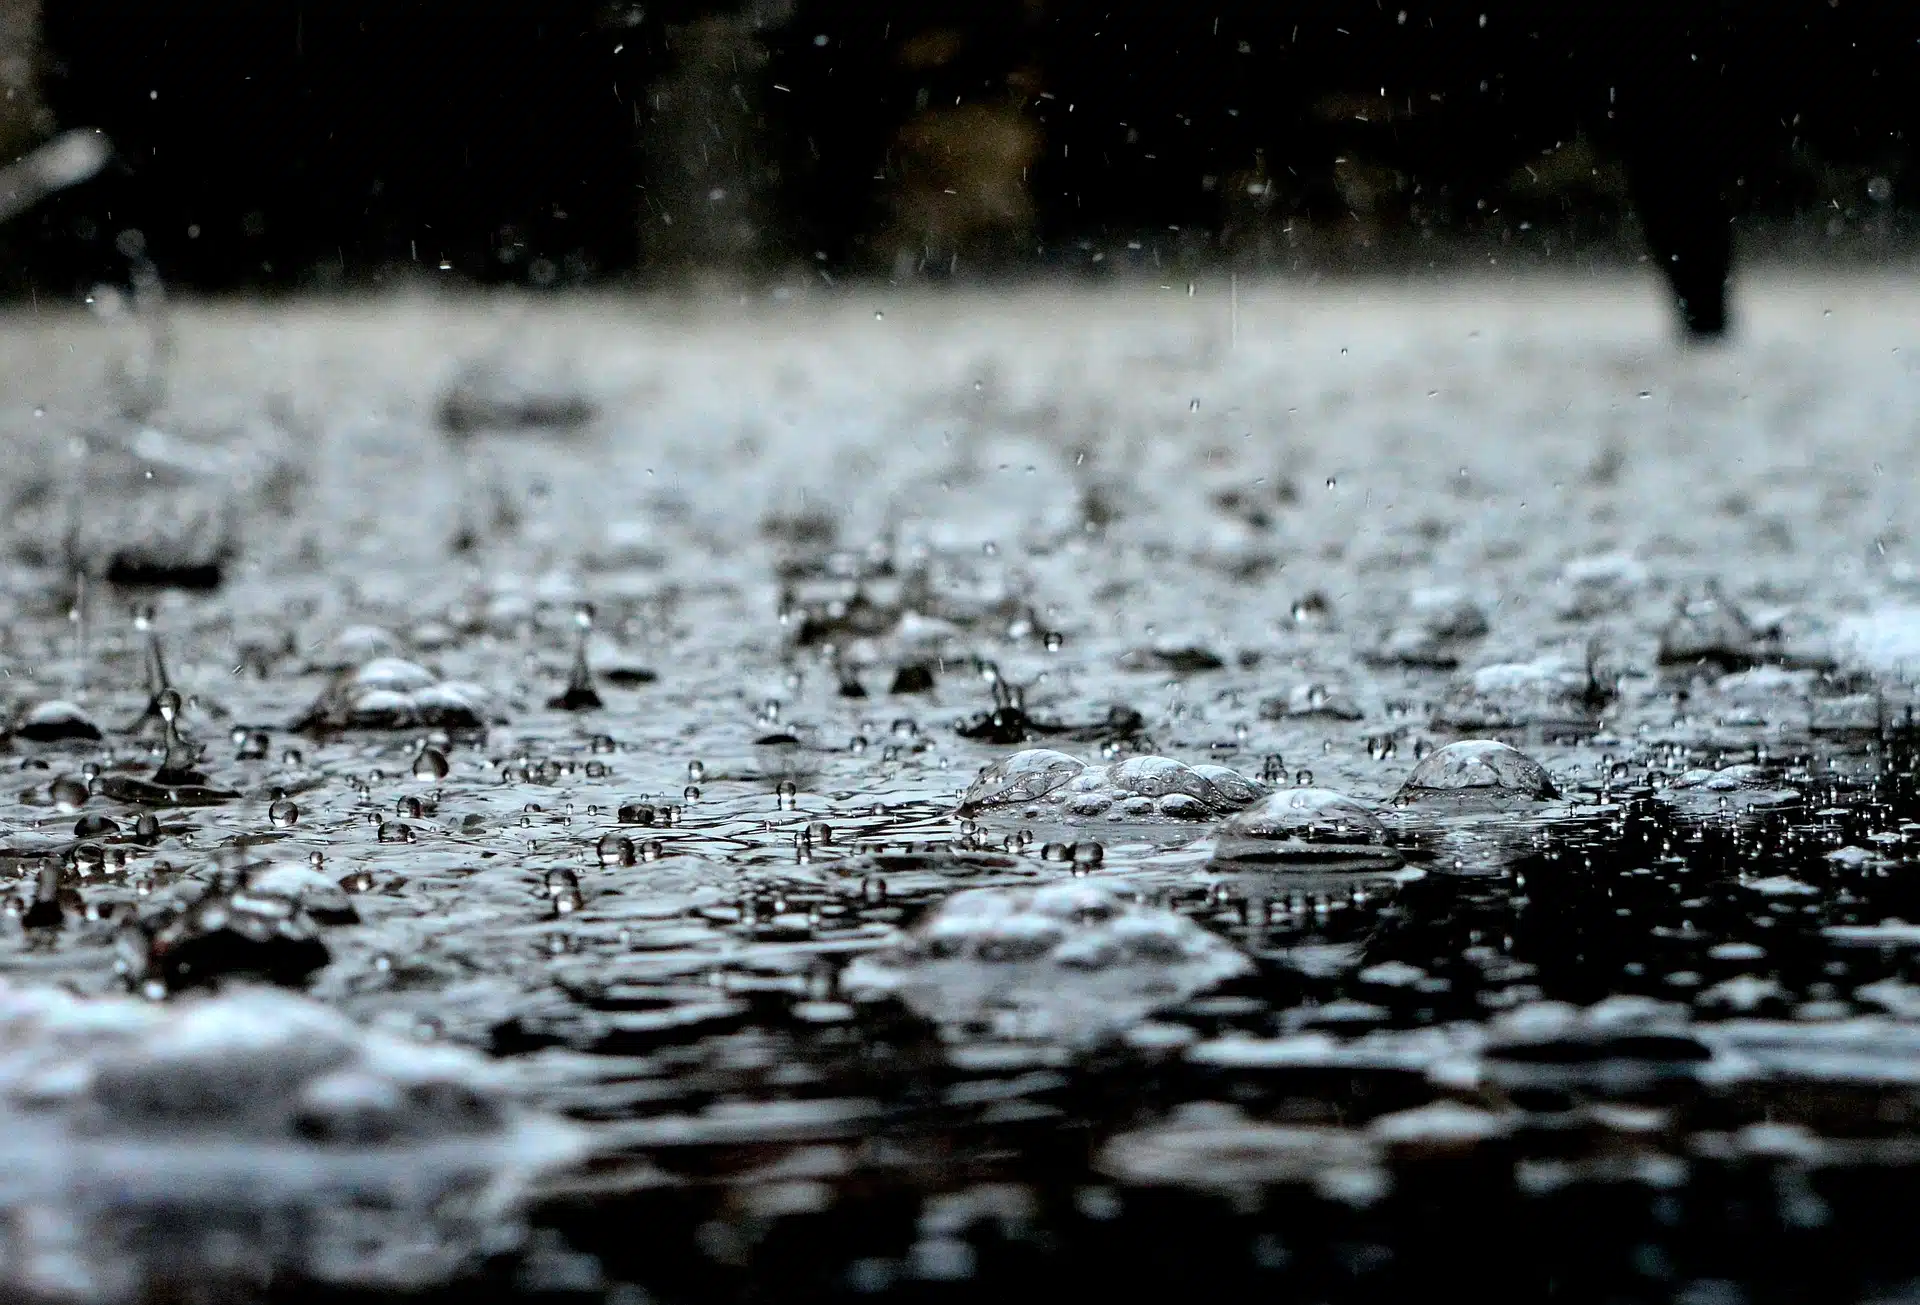 Inensa lluvia cae a charco de agua pluvial